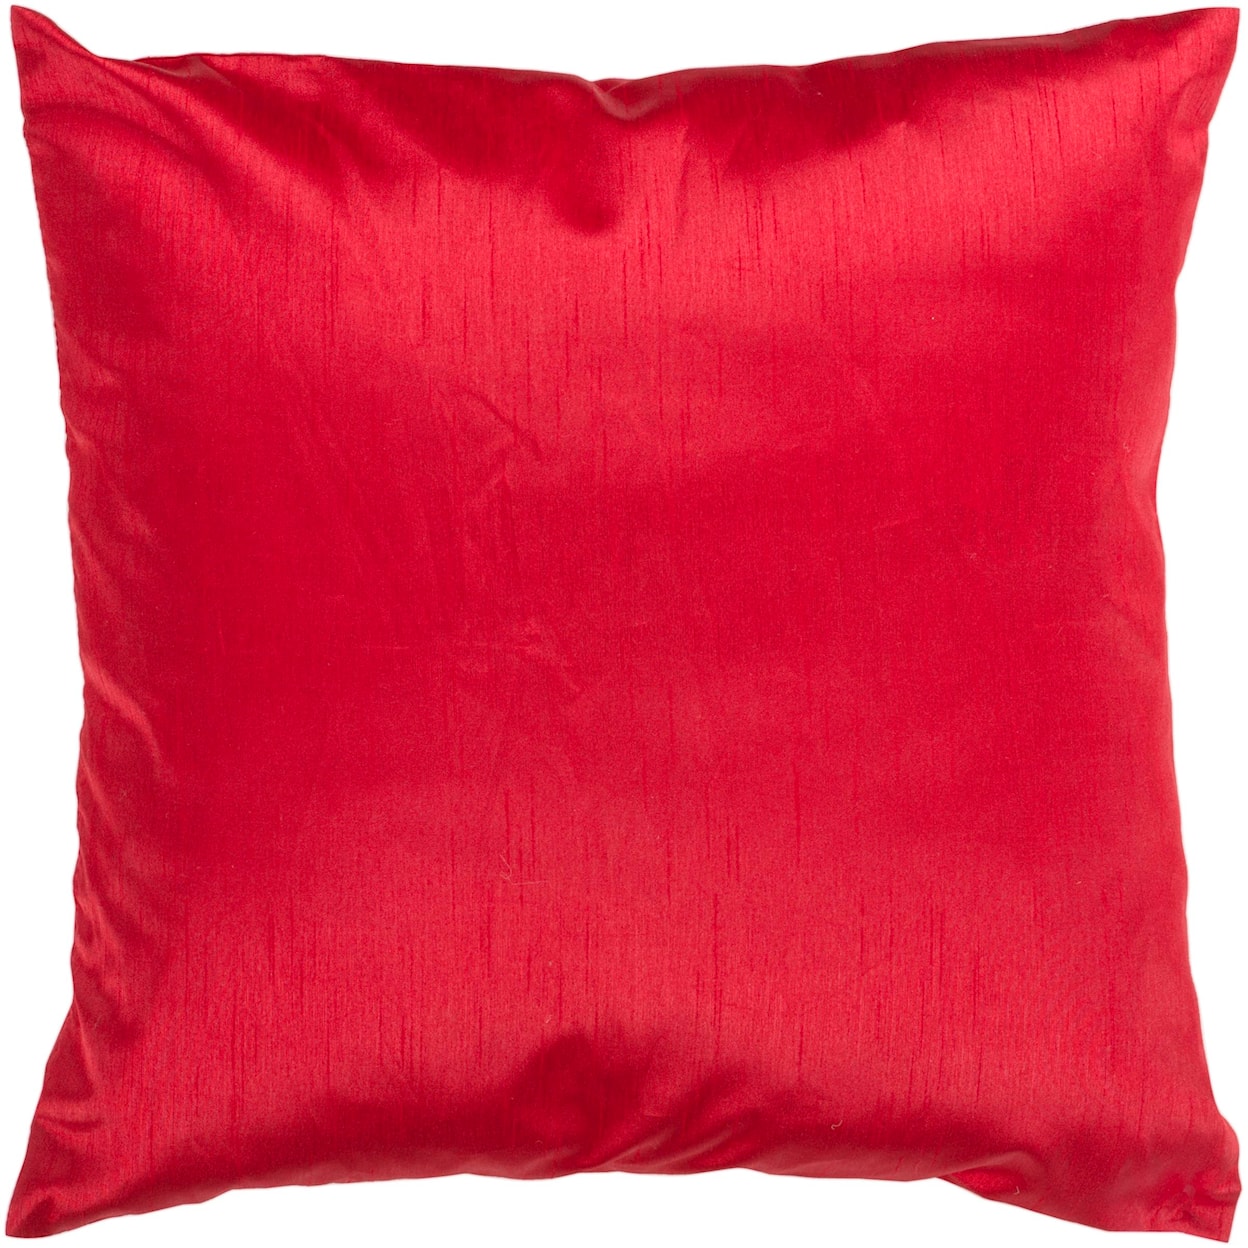 Surya Rugs Pillows 18" x 18" Pillow